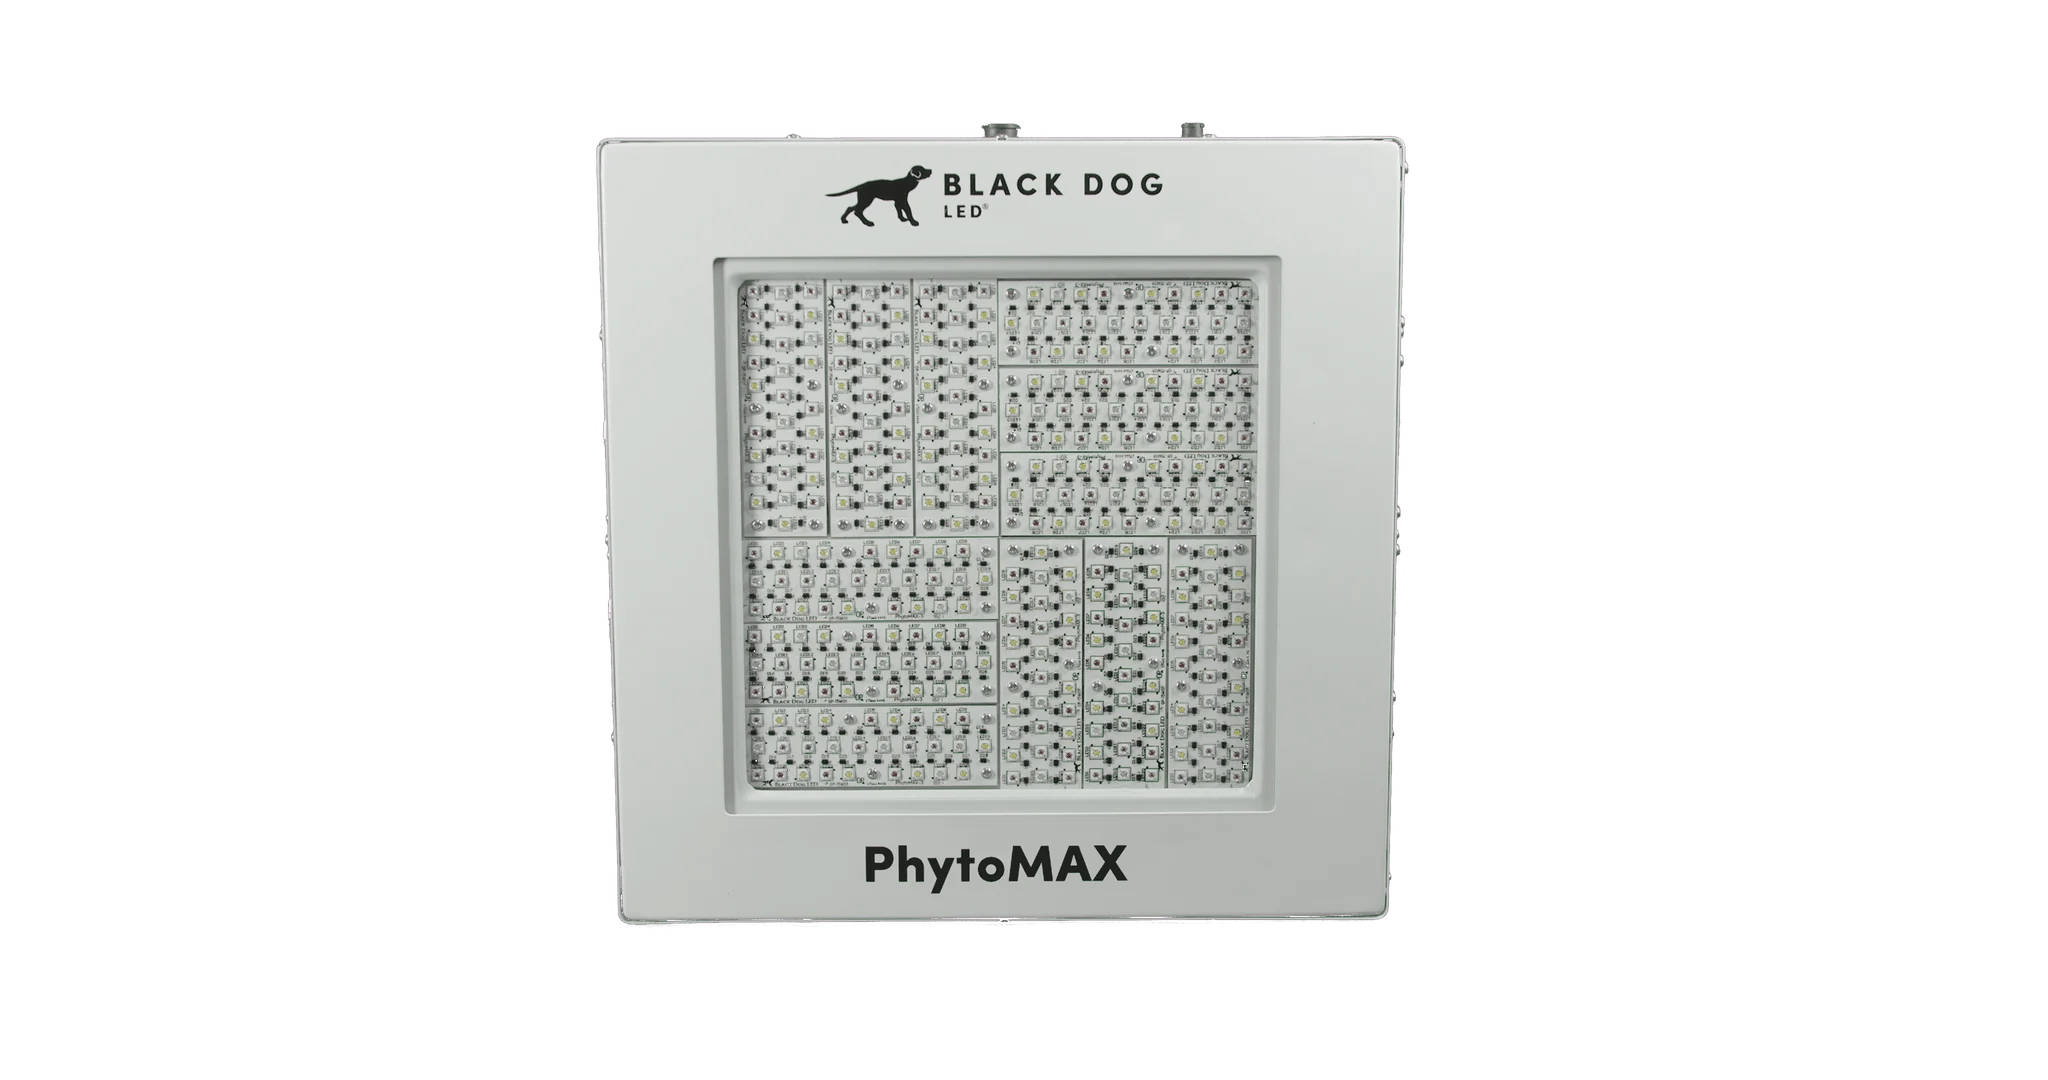 Black Dog PhytoMAX-4 12SP 750 Watt LED Grow Light - Green Thumb Depot